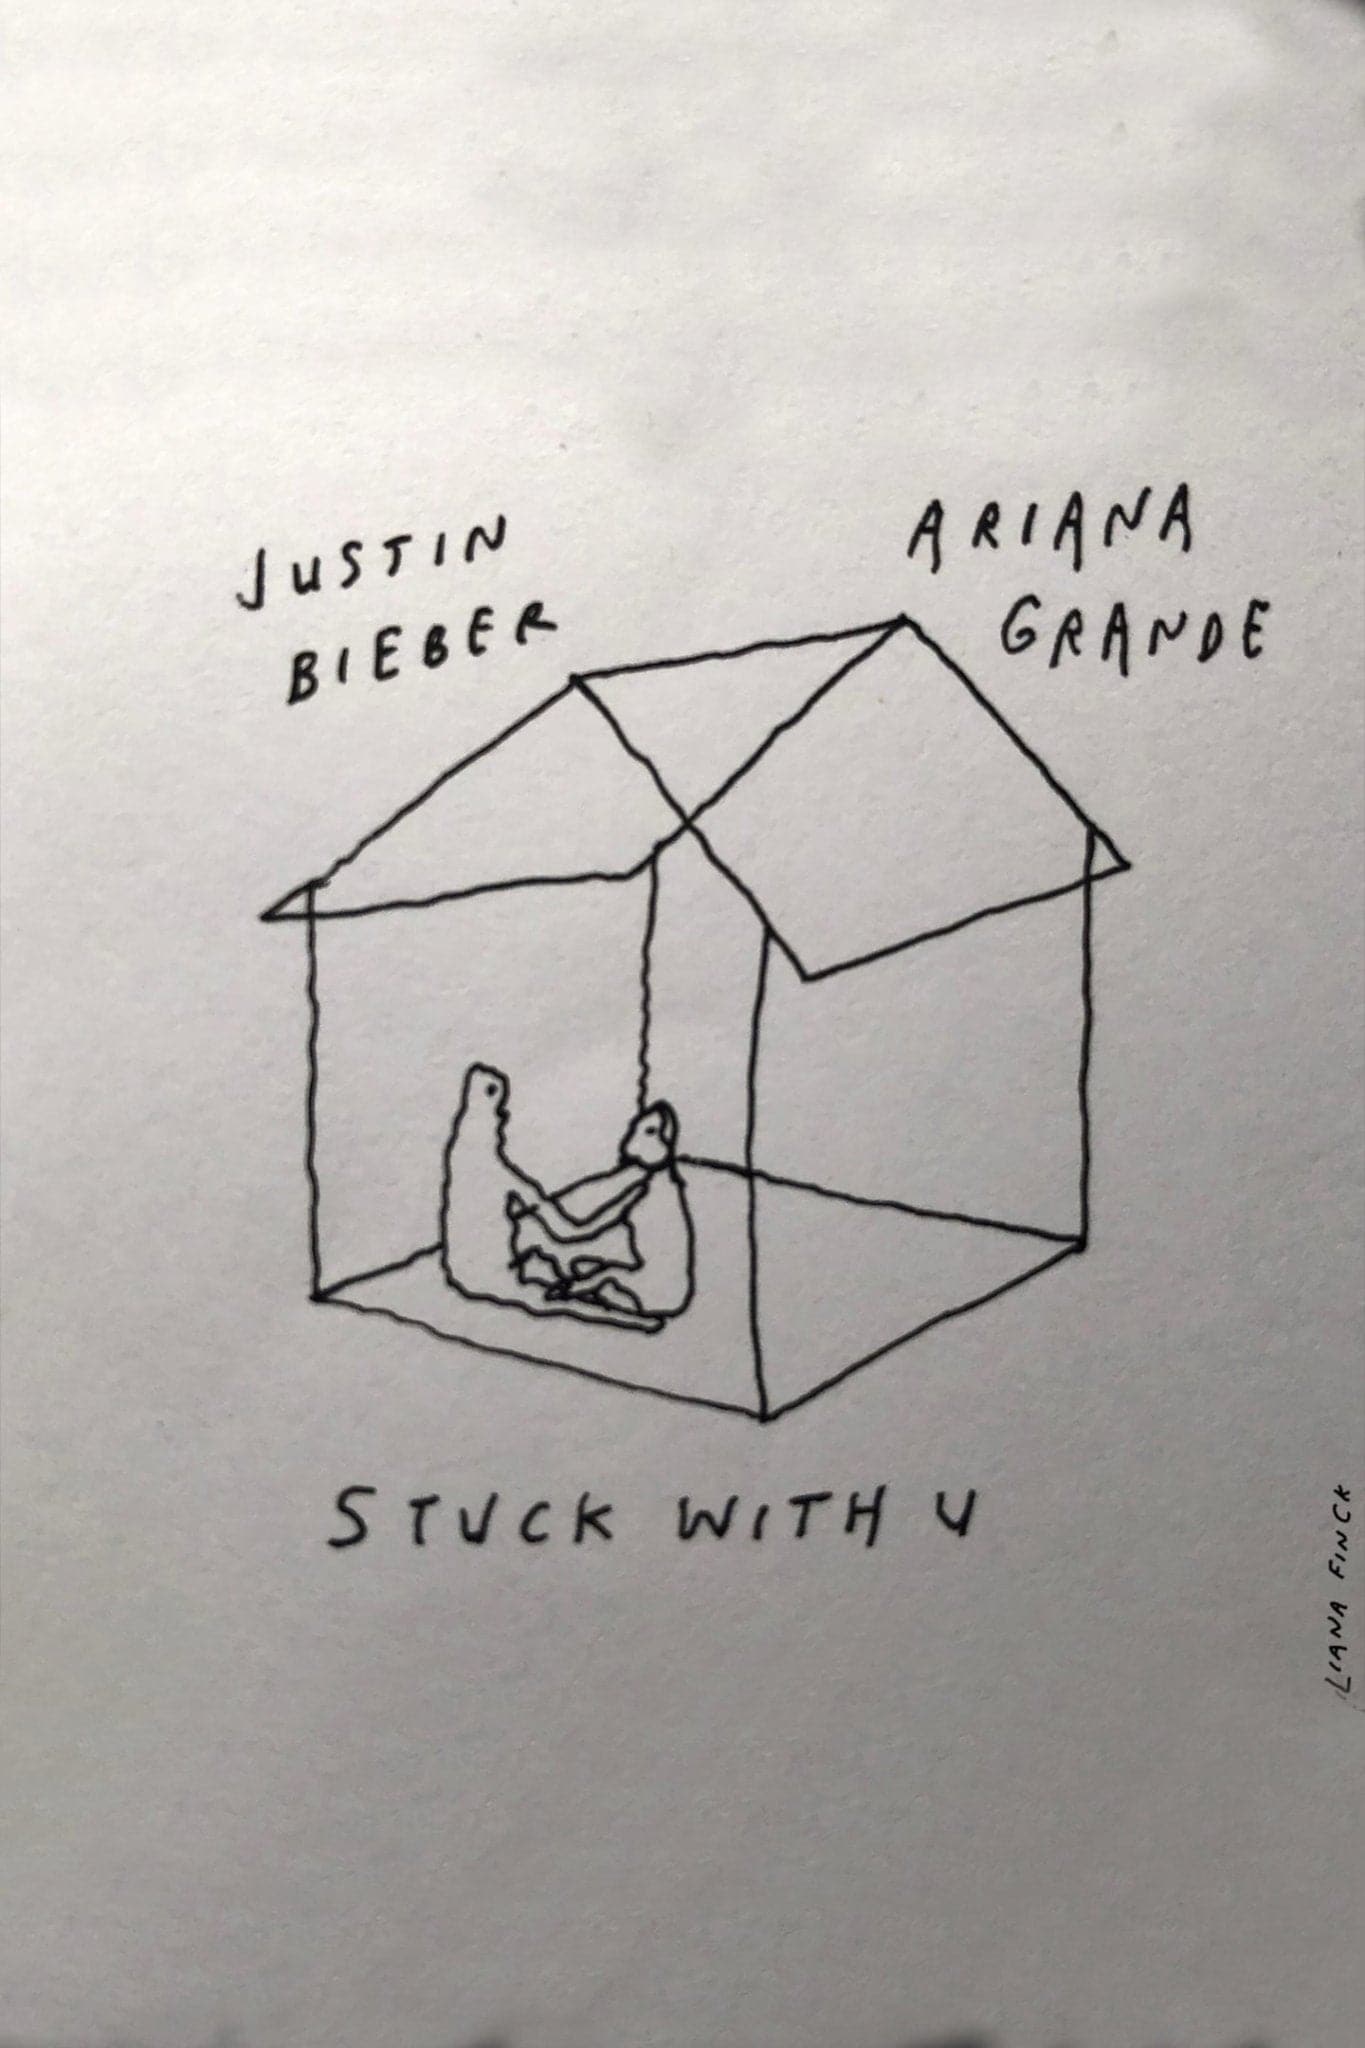 Justin Bieber x Ariana Grande ‘Stuck With U’ Poster - Posters Plug